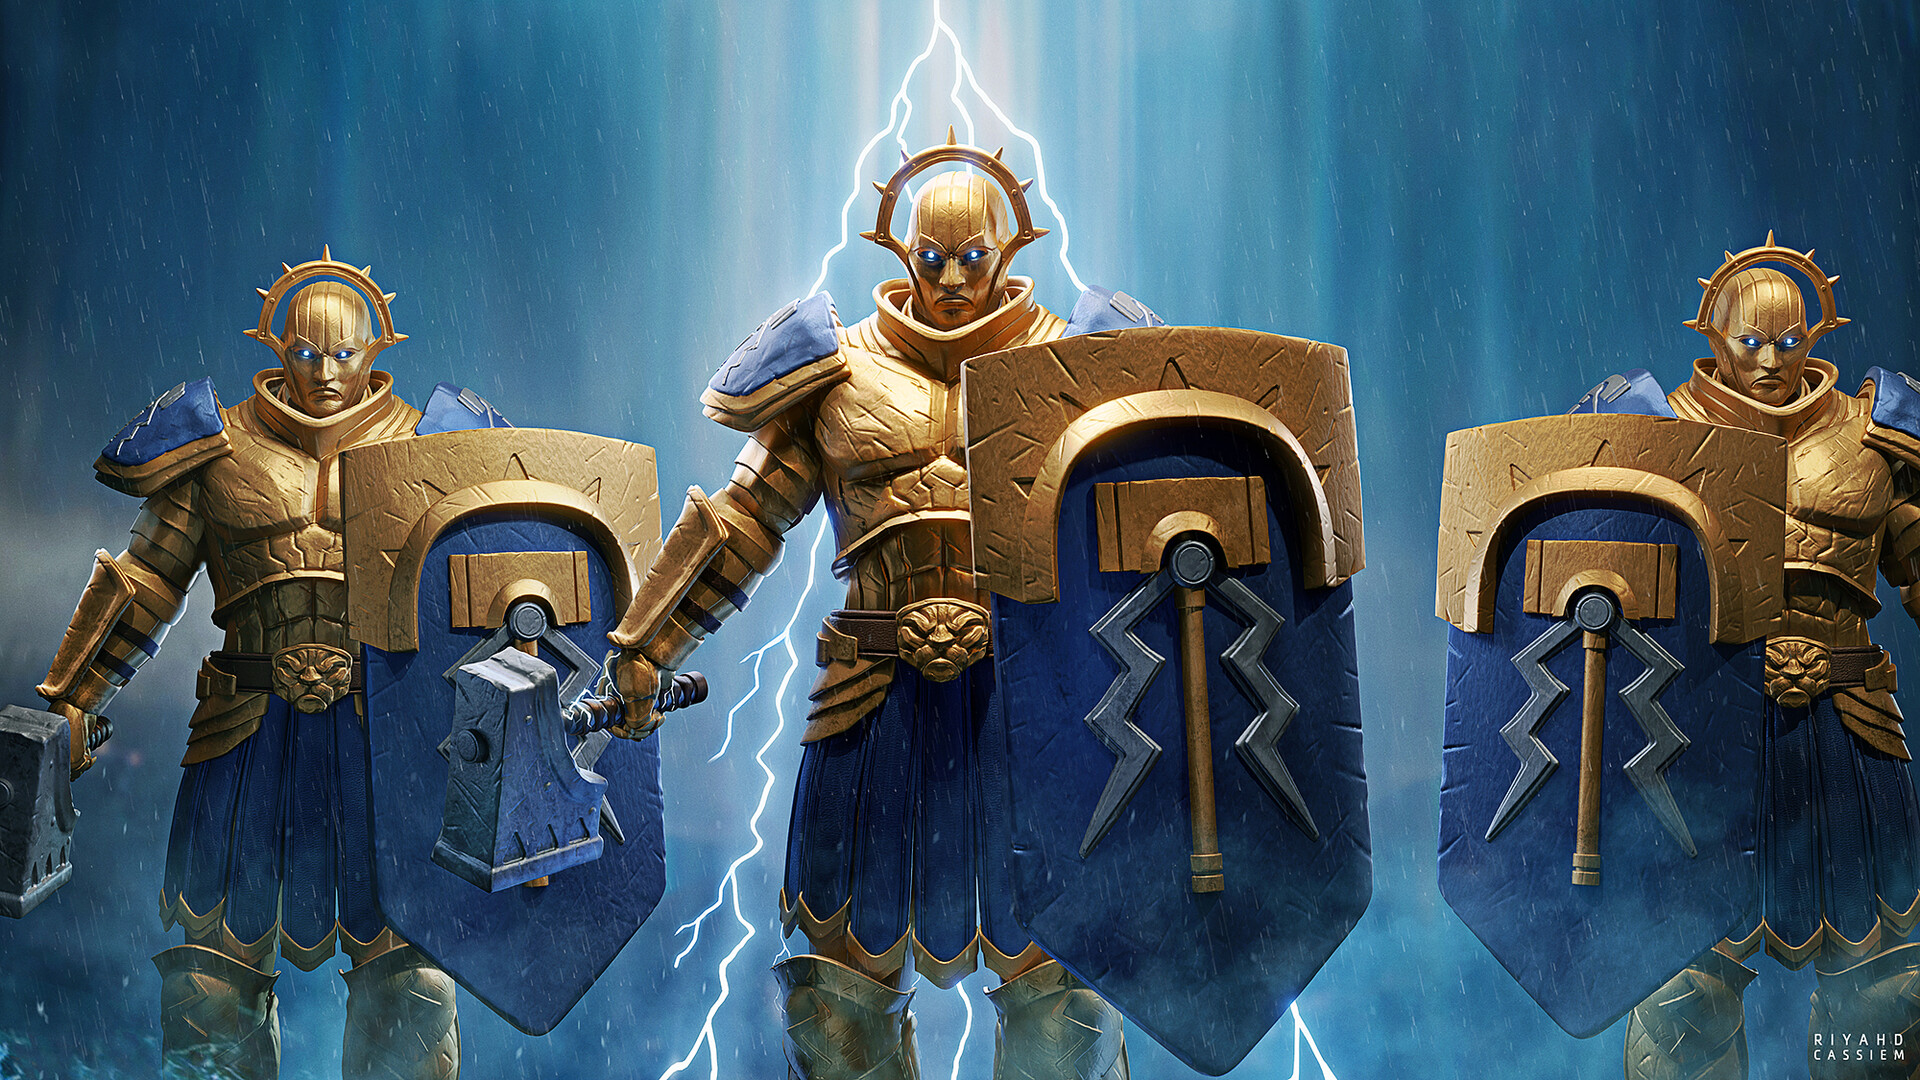 stormcast eternals, video game, warhammer, armor, gold, warrior